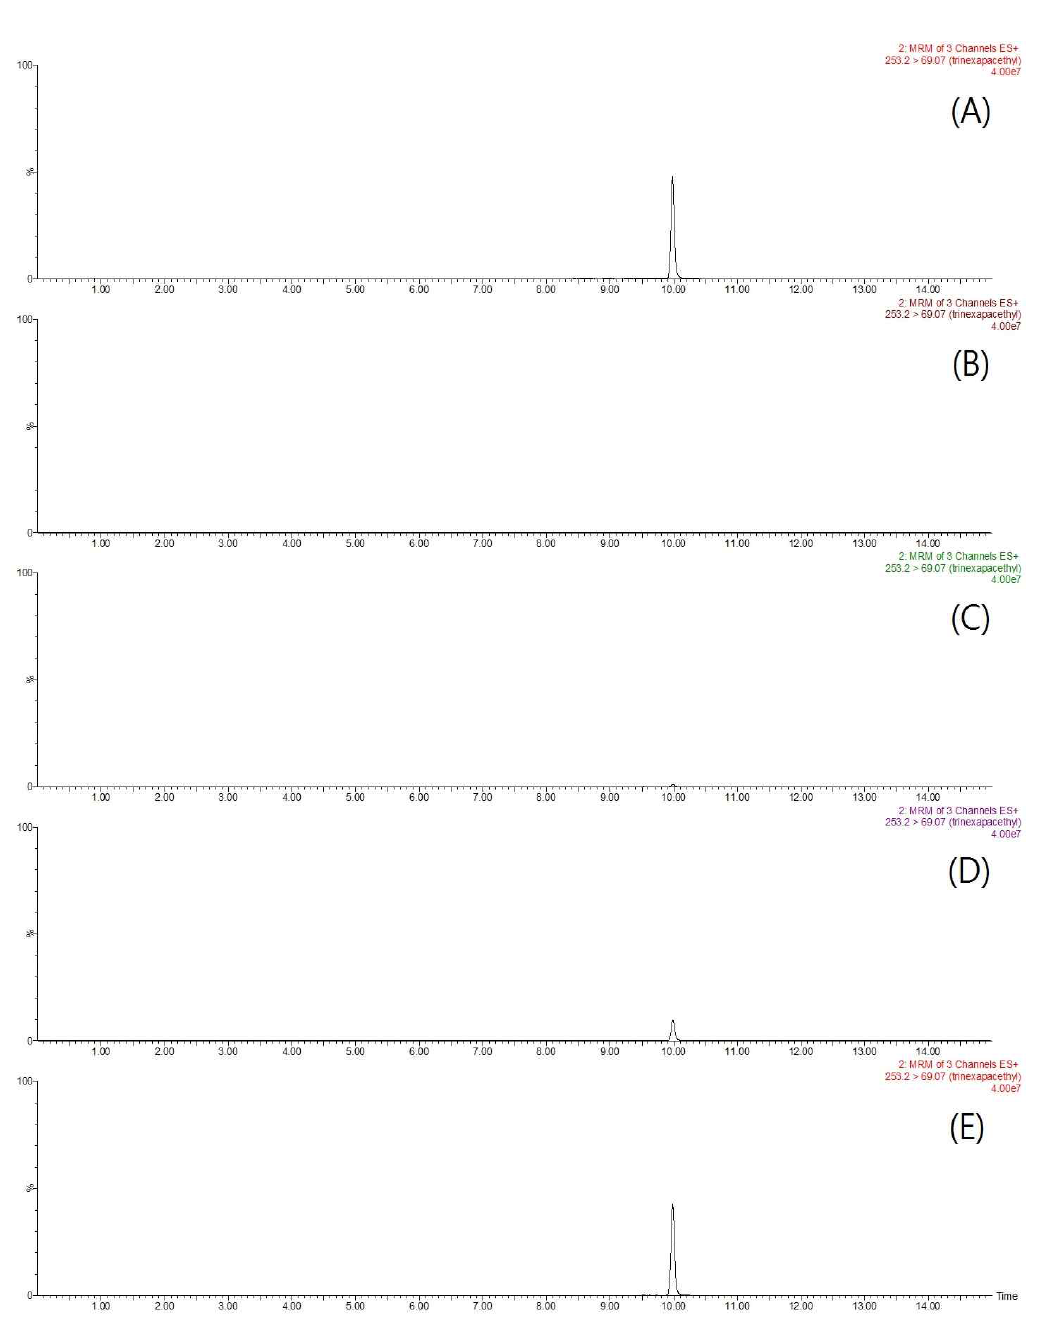 Representative MRM (quantification ion) chromatograms of trinexapac-ethyl corresponding to: A, standard solution at 0.5 mg/kg; B, control pepper; C, spiked at 0.01 mg/kg; D, spiked at 0.1 mg/kg; and E, spiked at 0.5 mg/kg